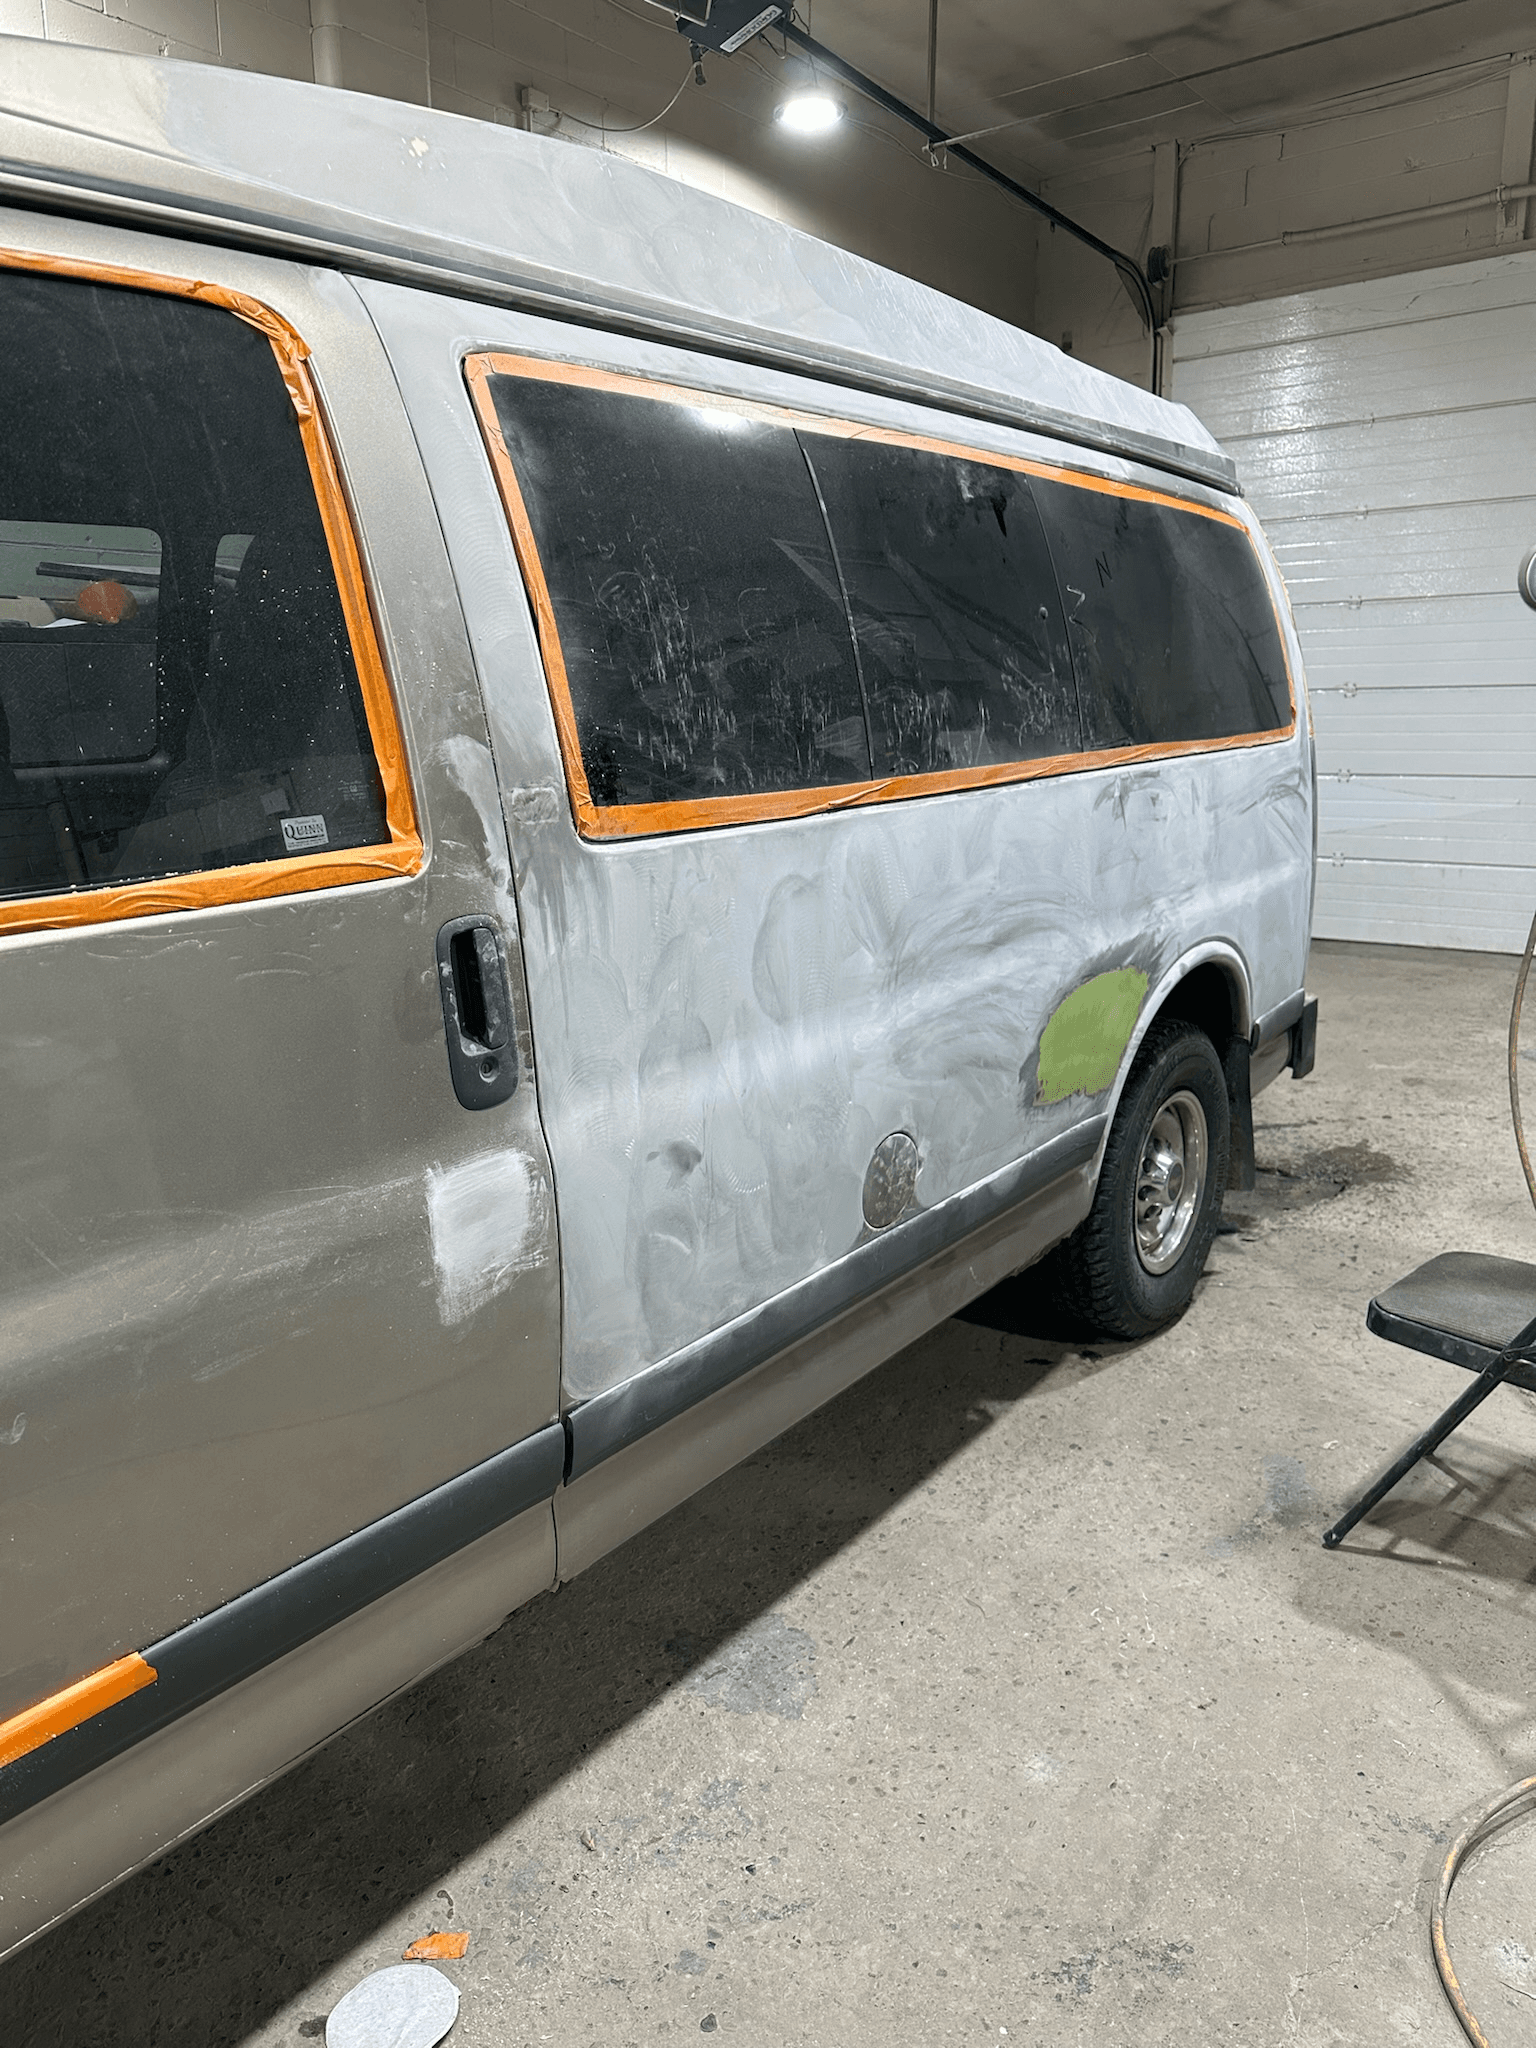 Auto body specialist applying paint